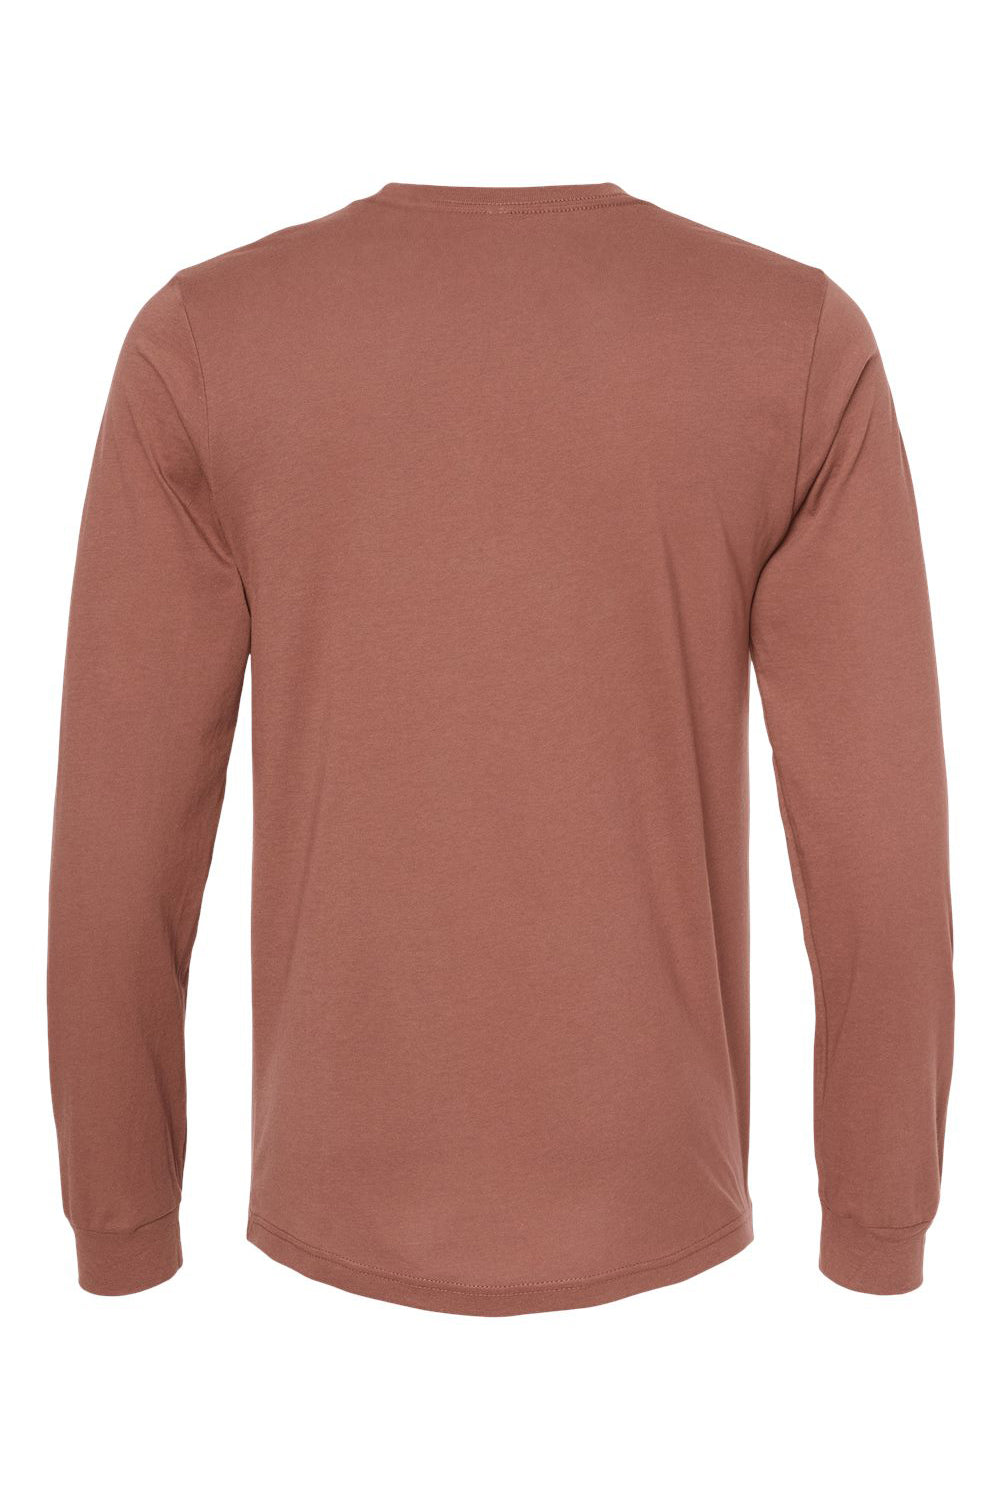 Bella + Canvas BC3501/3501 Mens Jersey Long Sleeve Crewneck T-Shirt Chestnut Brown Flat Back